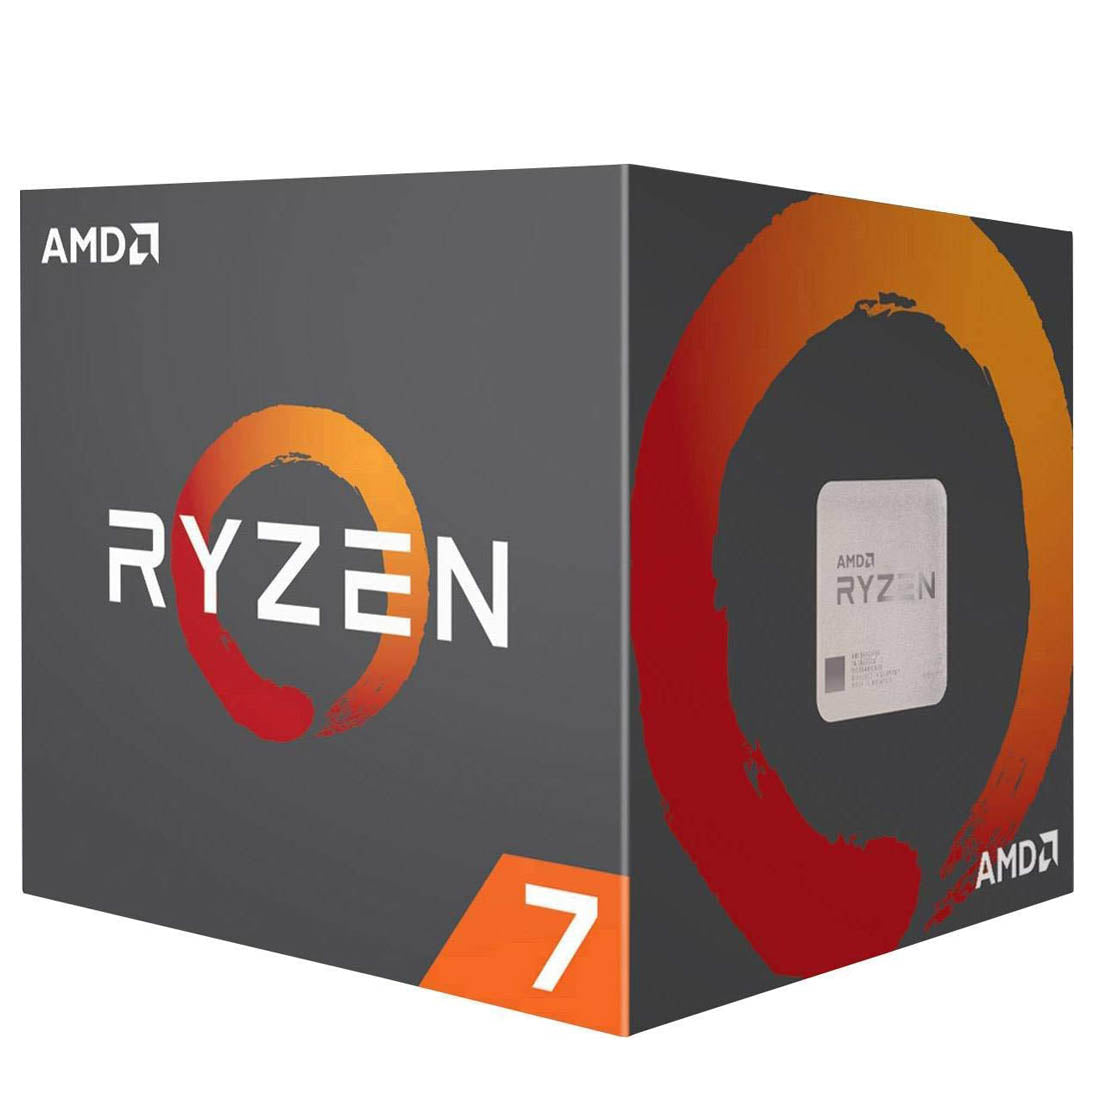 AMD Ryzen 7 3800X डेस्कटॉप प्रोसेसर 8 कोर 4.5GHz तक 36MB कैश AM4 सॉकेट